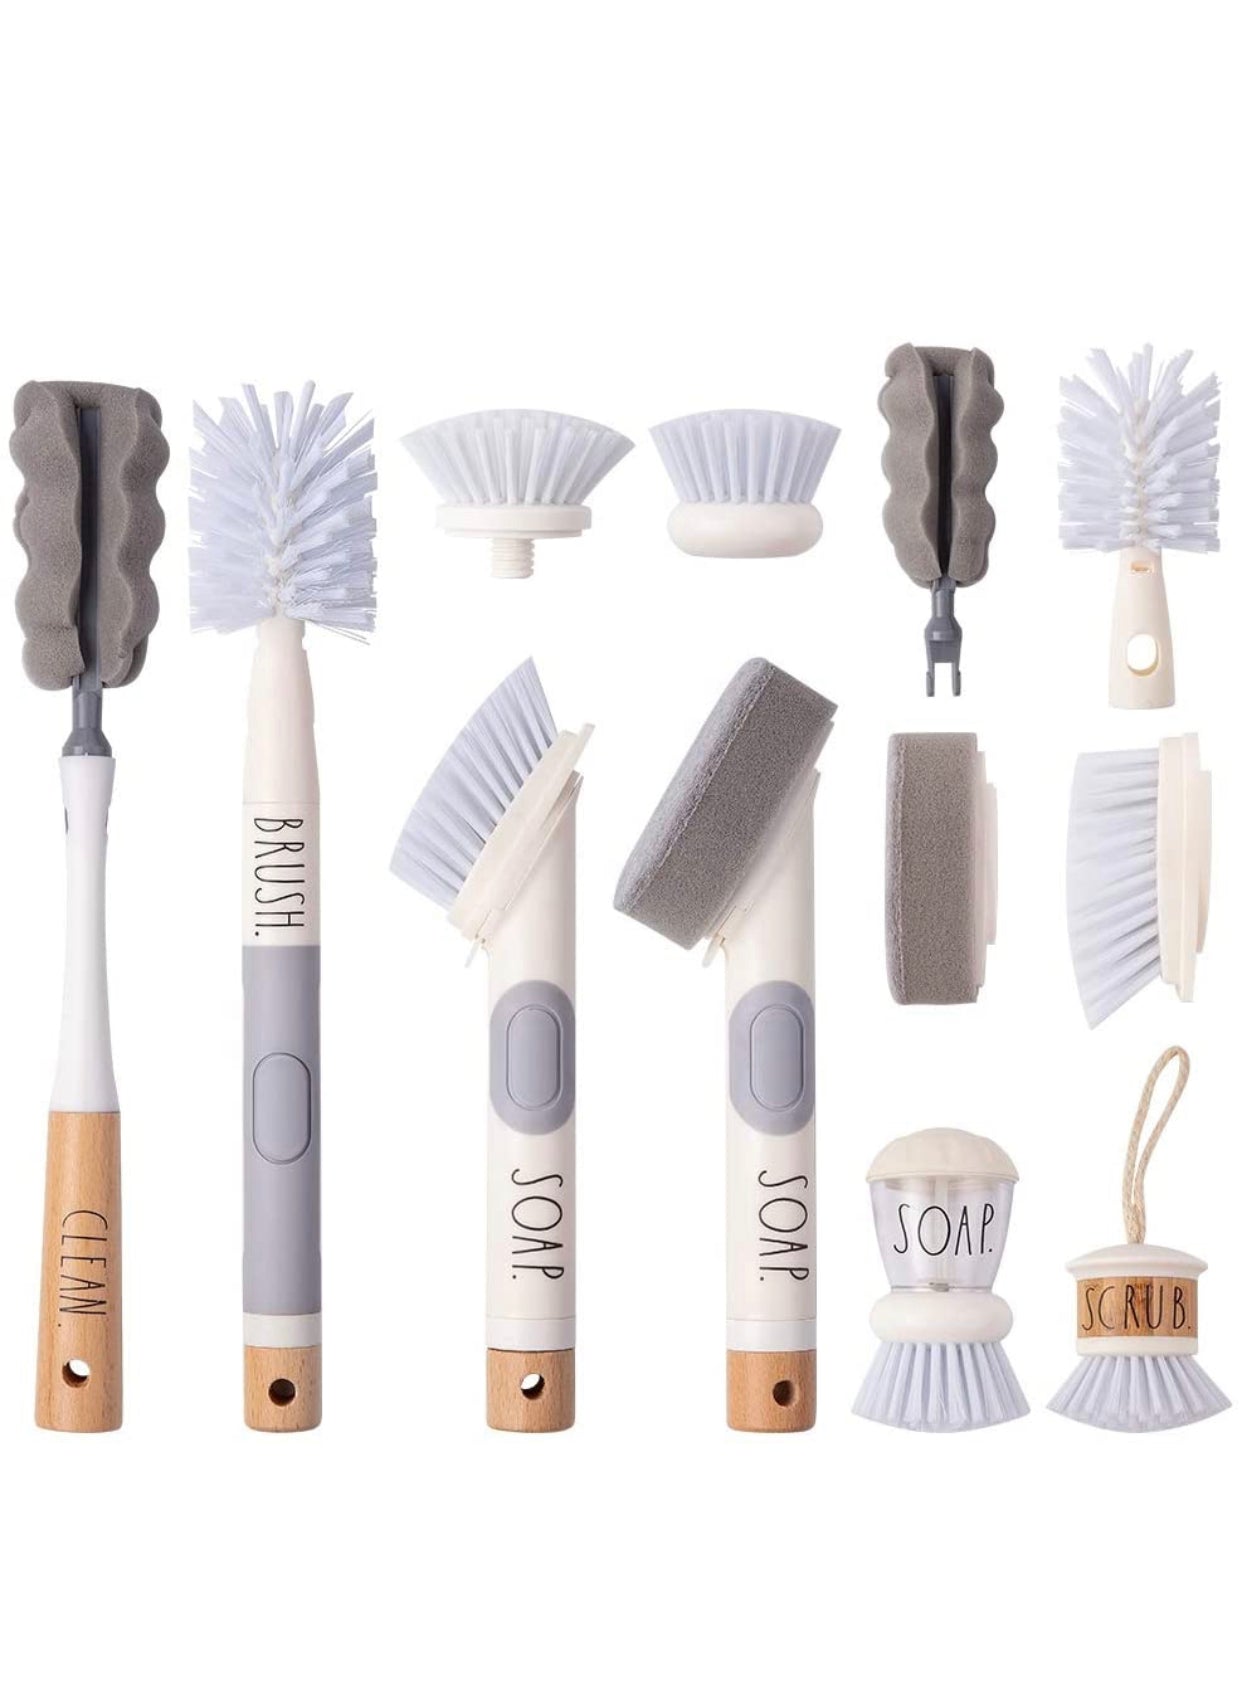 Openfly Paquete de 8 cepillos de limpieza de cocina, multiusos, juego de  cepillos de limpieza profunda para el hogar con cepillo para fregar,  cepillo